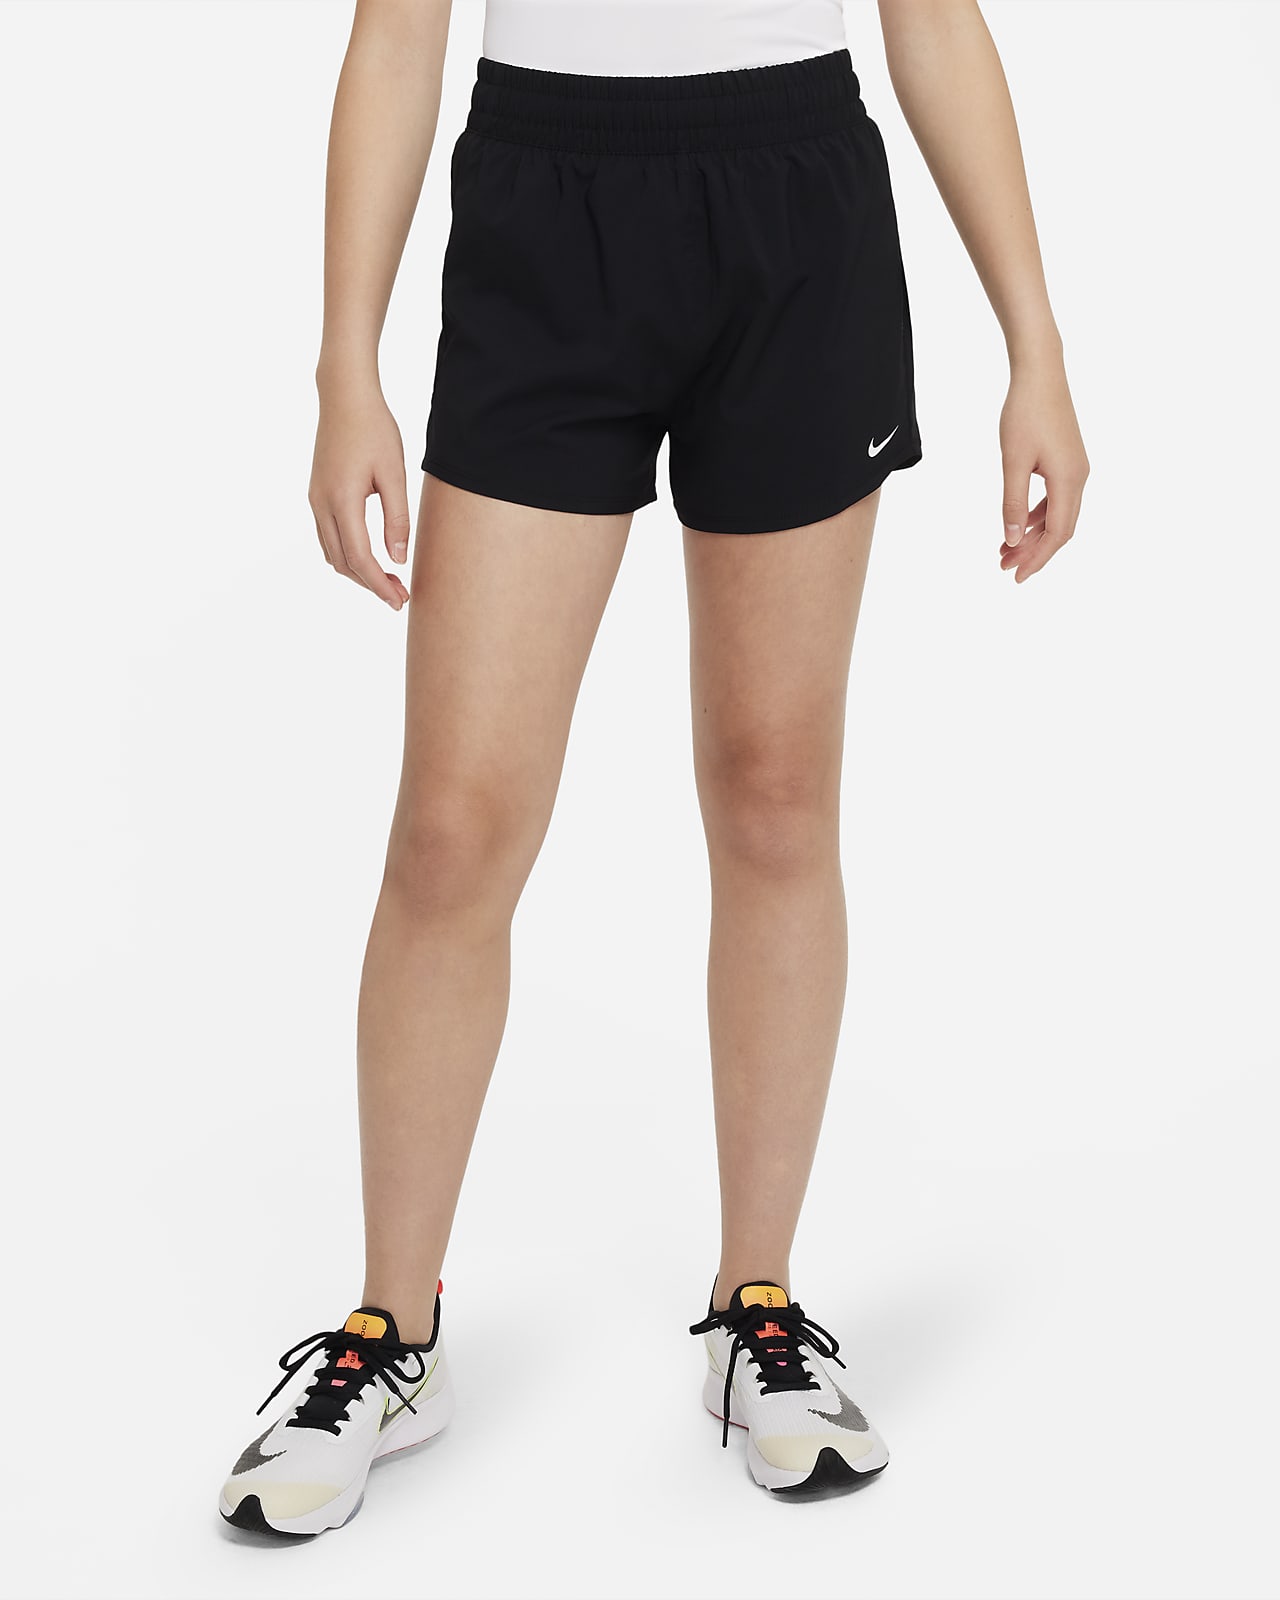 Soccer Plus  NIKE Men's Nike Flex Woven Training Shorts